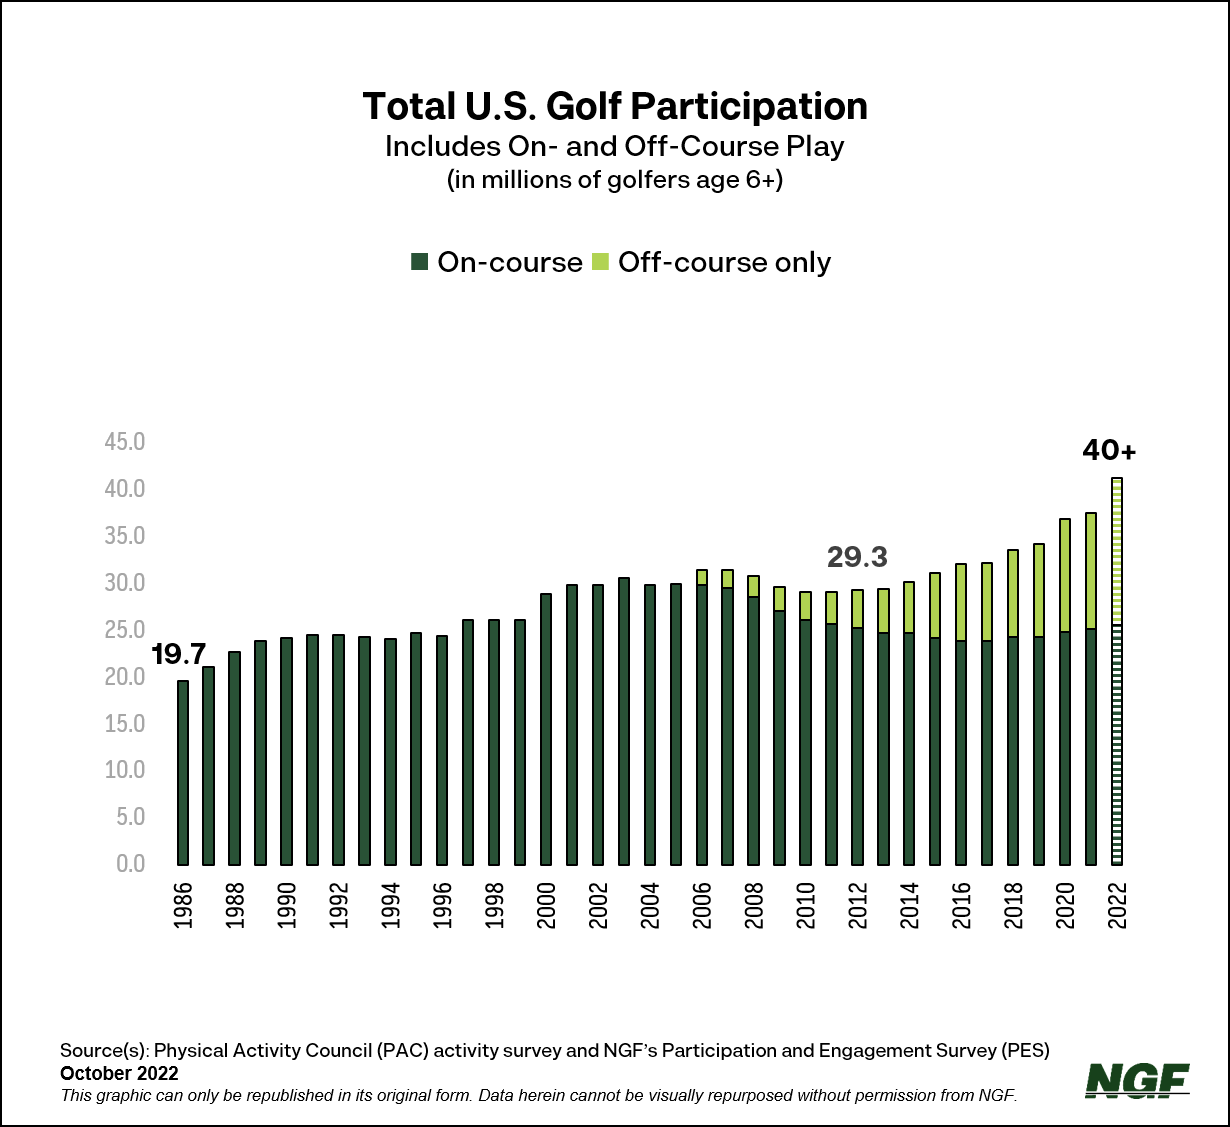 New Milestones in Golf’s Evolution